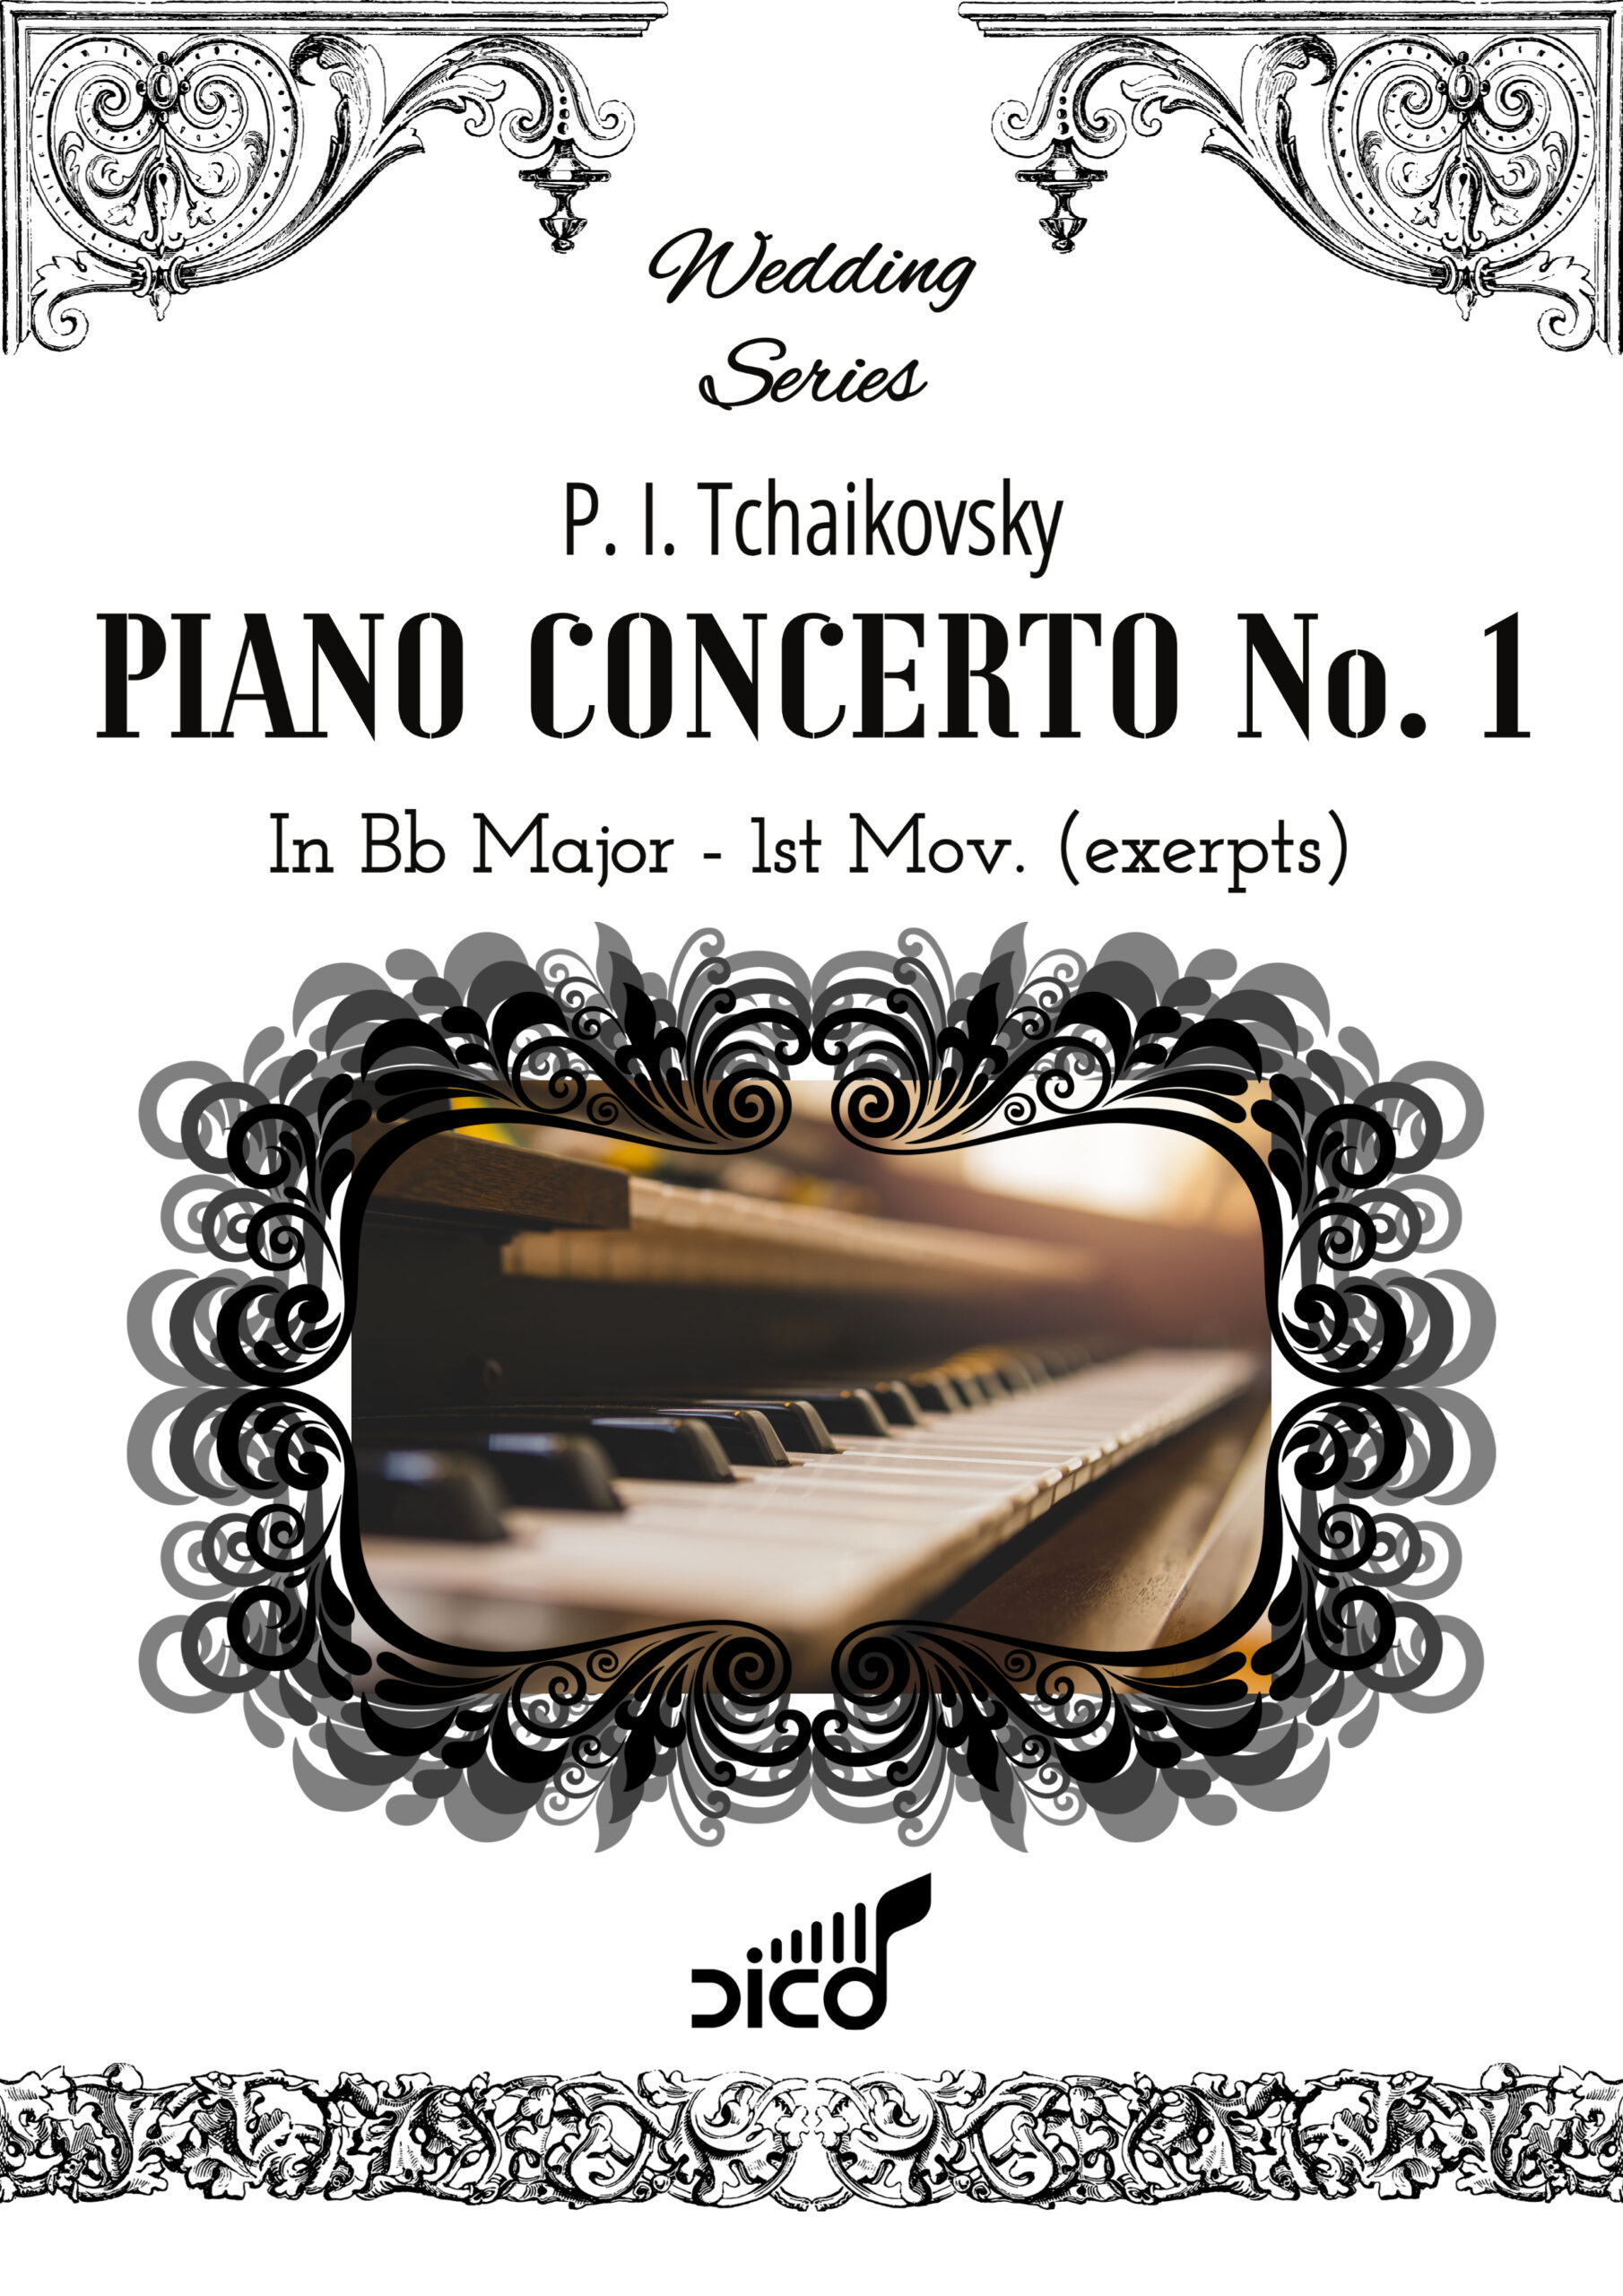 Wedding Series Piano Concerto No. 1 cover scaled